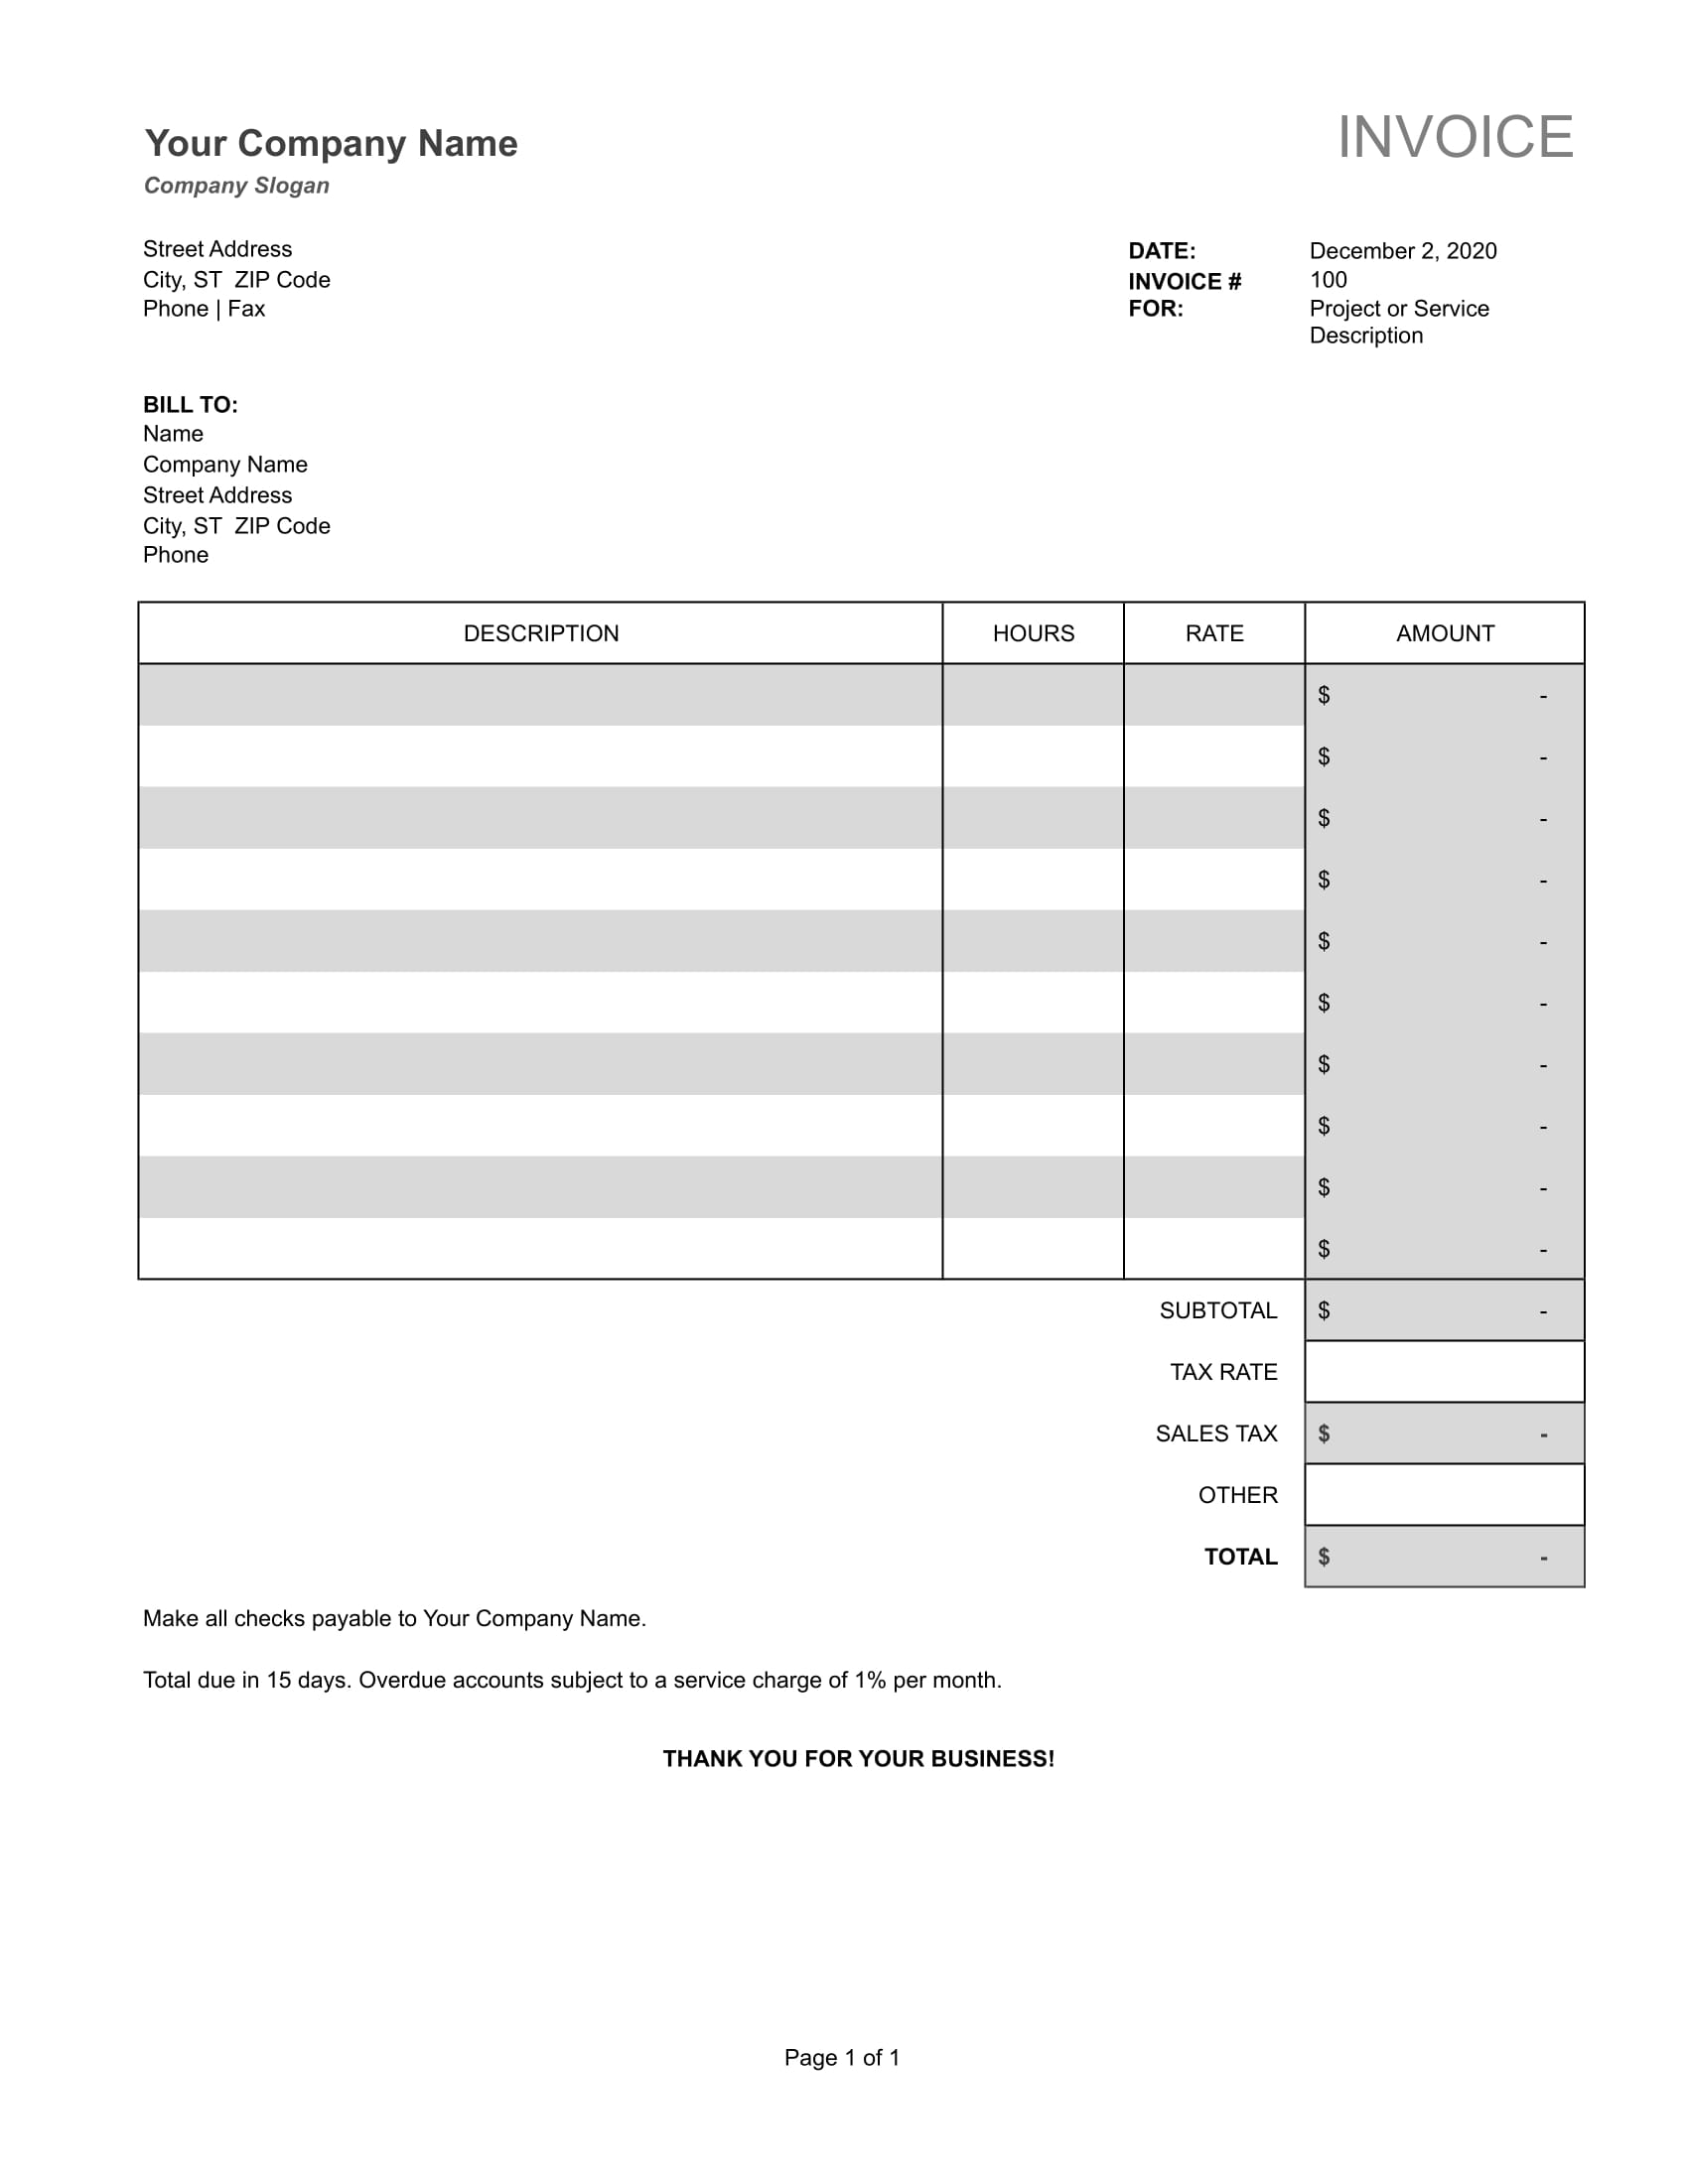 invoice-template-excel-2013-invoice-example-riset